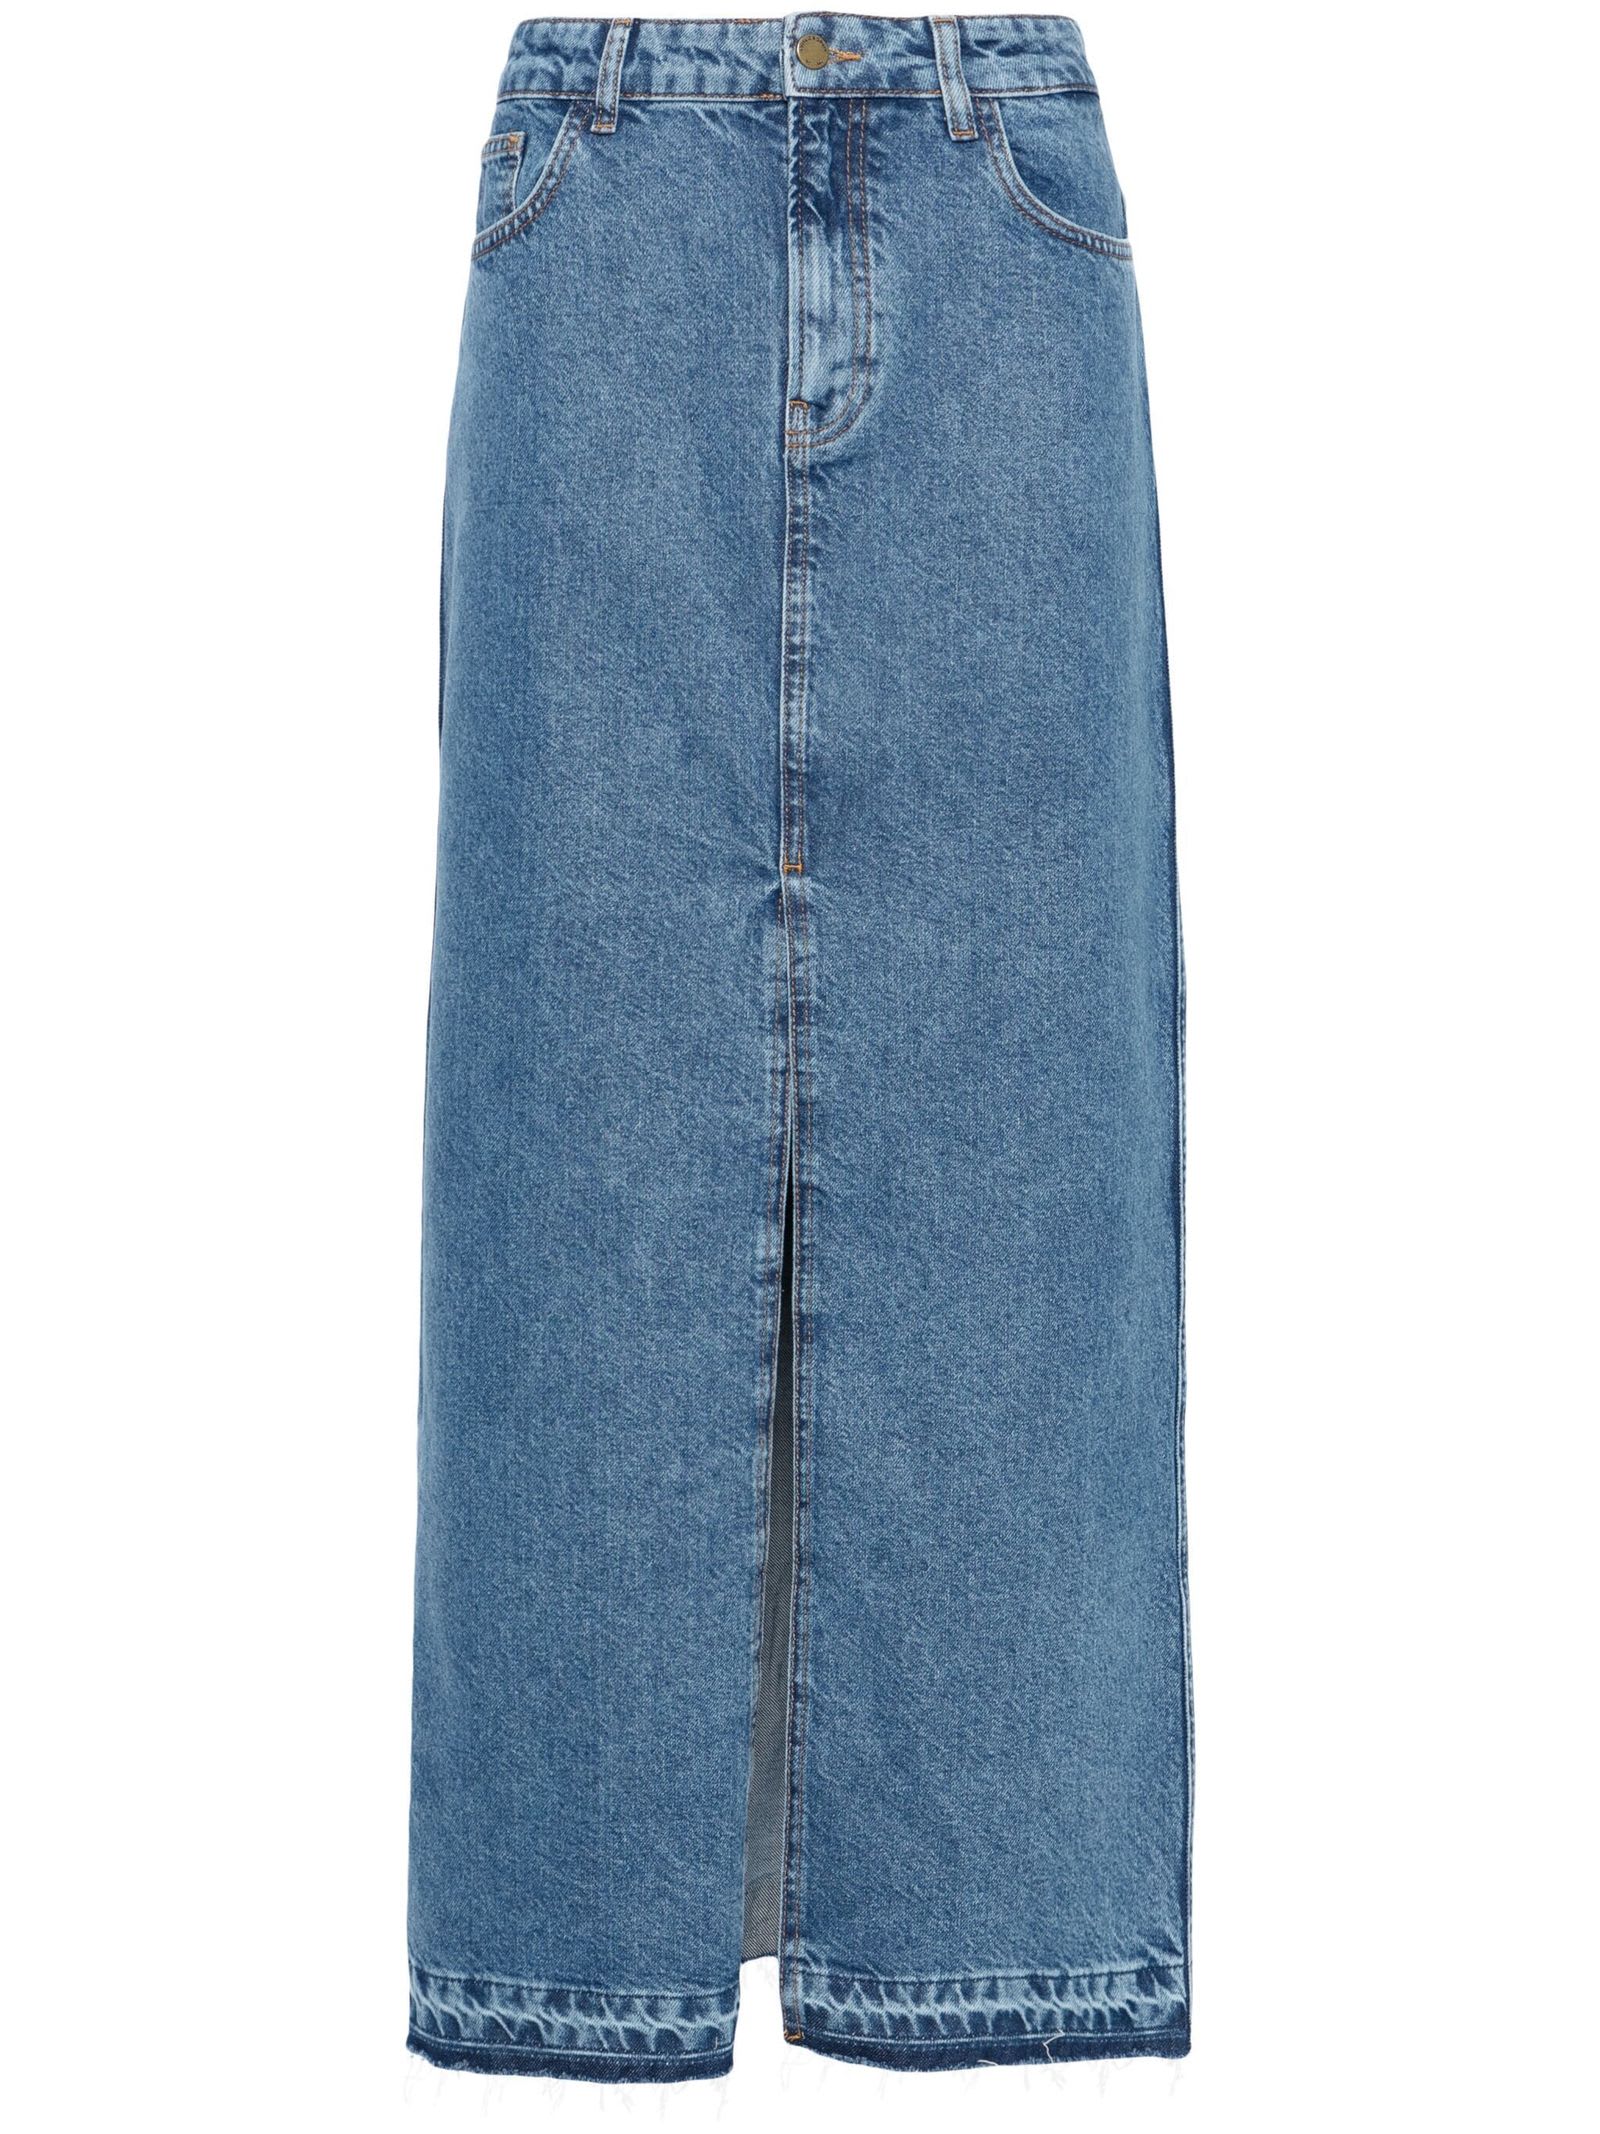 Indigo Blue Denim Maxi Skirt